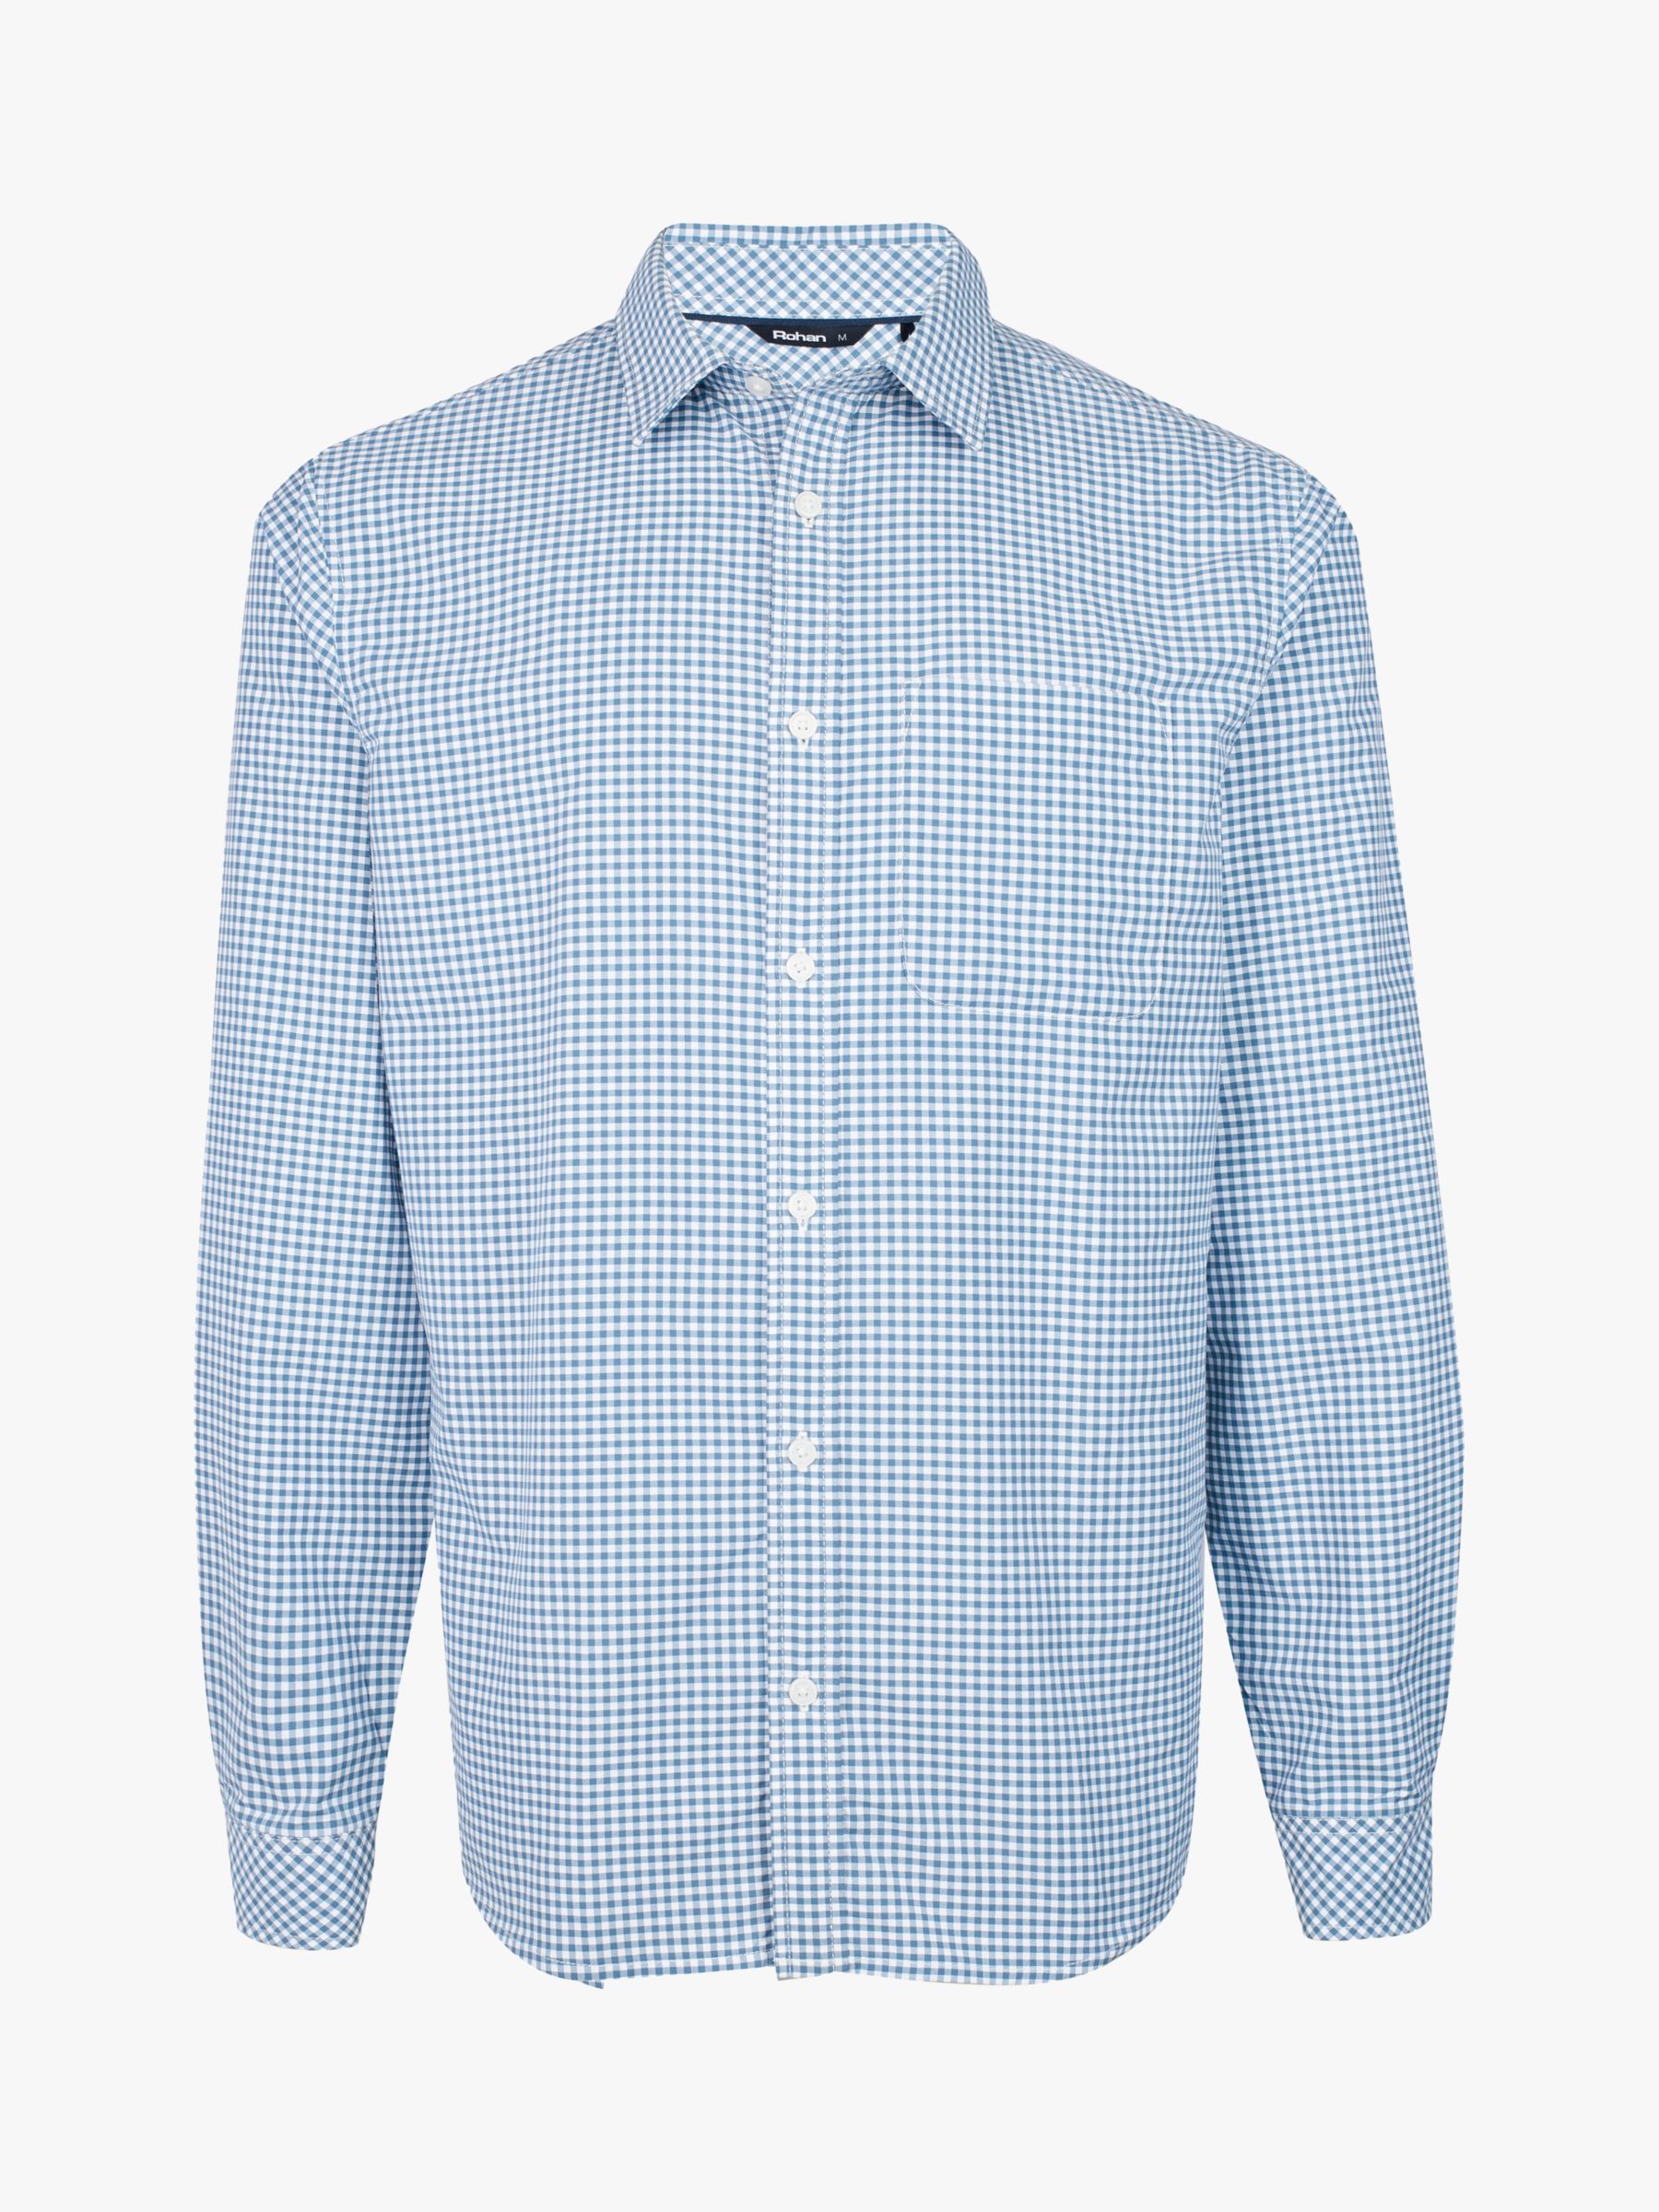 Rohan Portland Check Long Sleeve Shirt at John Lewis & Partners